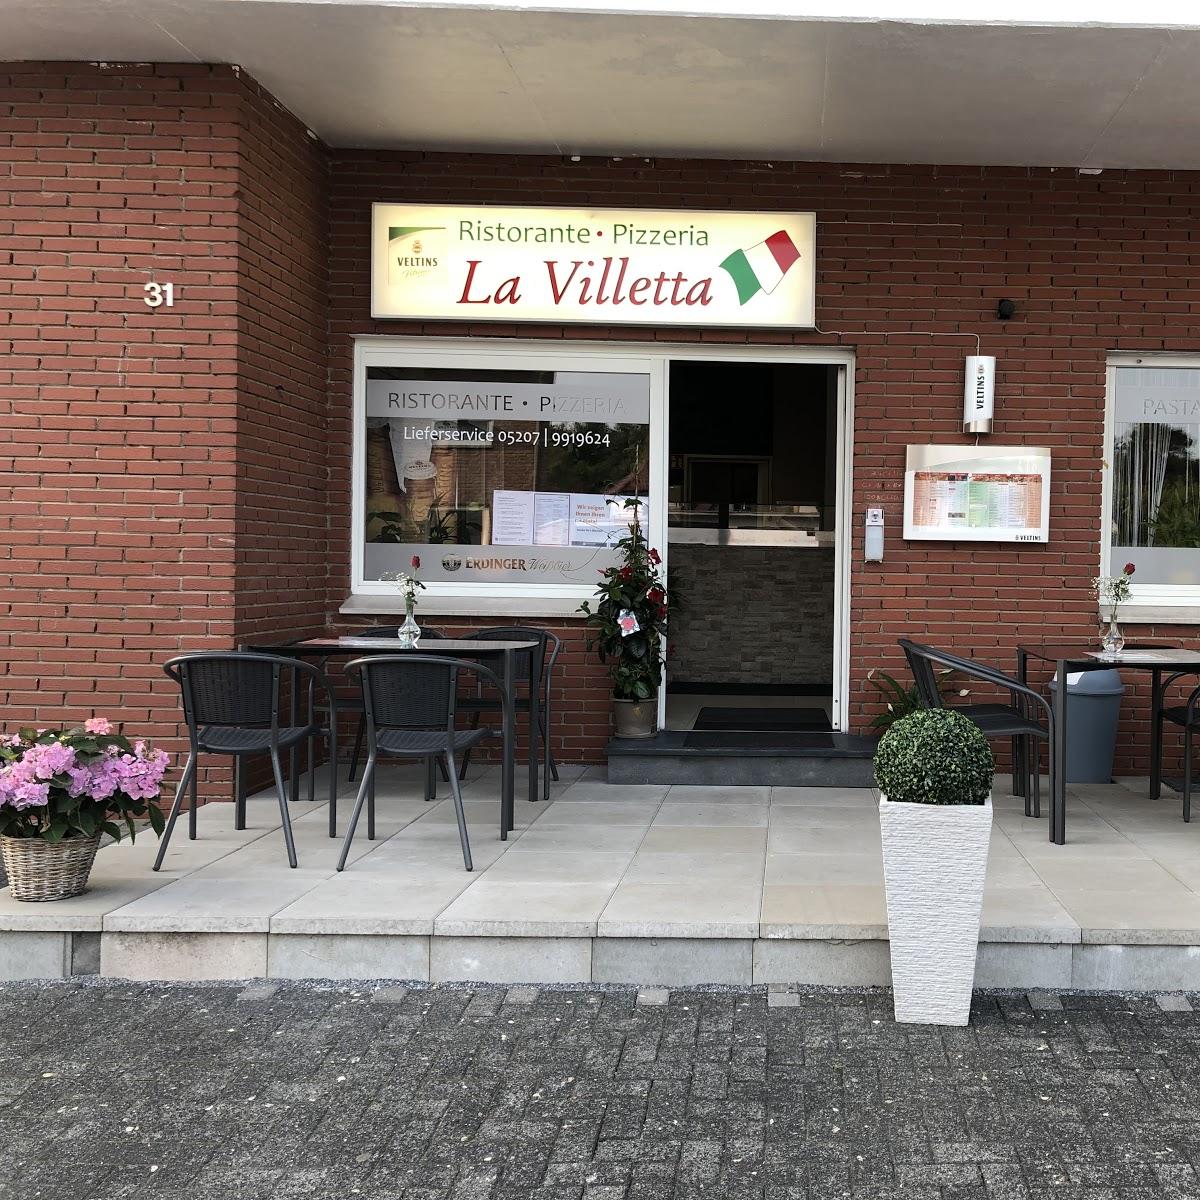 Restaurant "La Villetta" in Schloß Holte-Stukenbrock